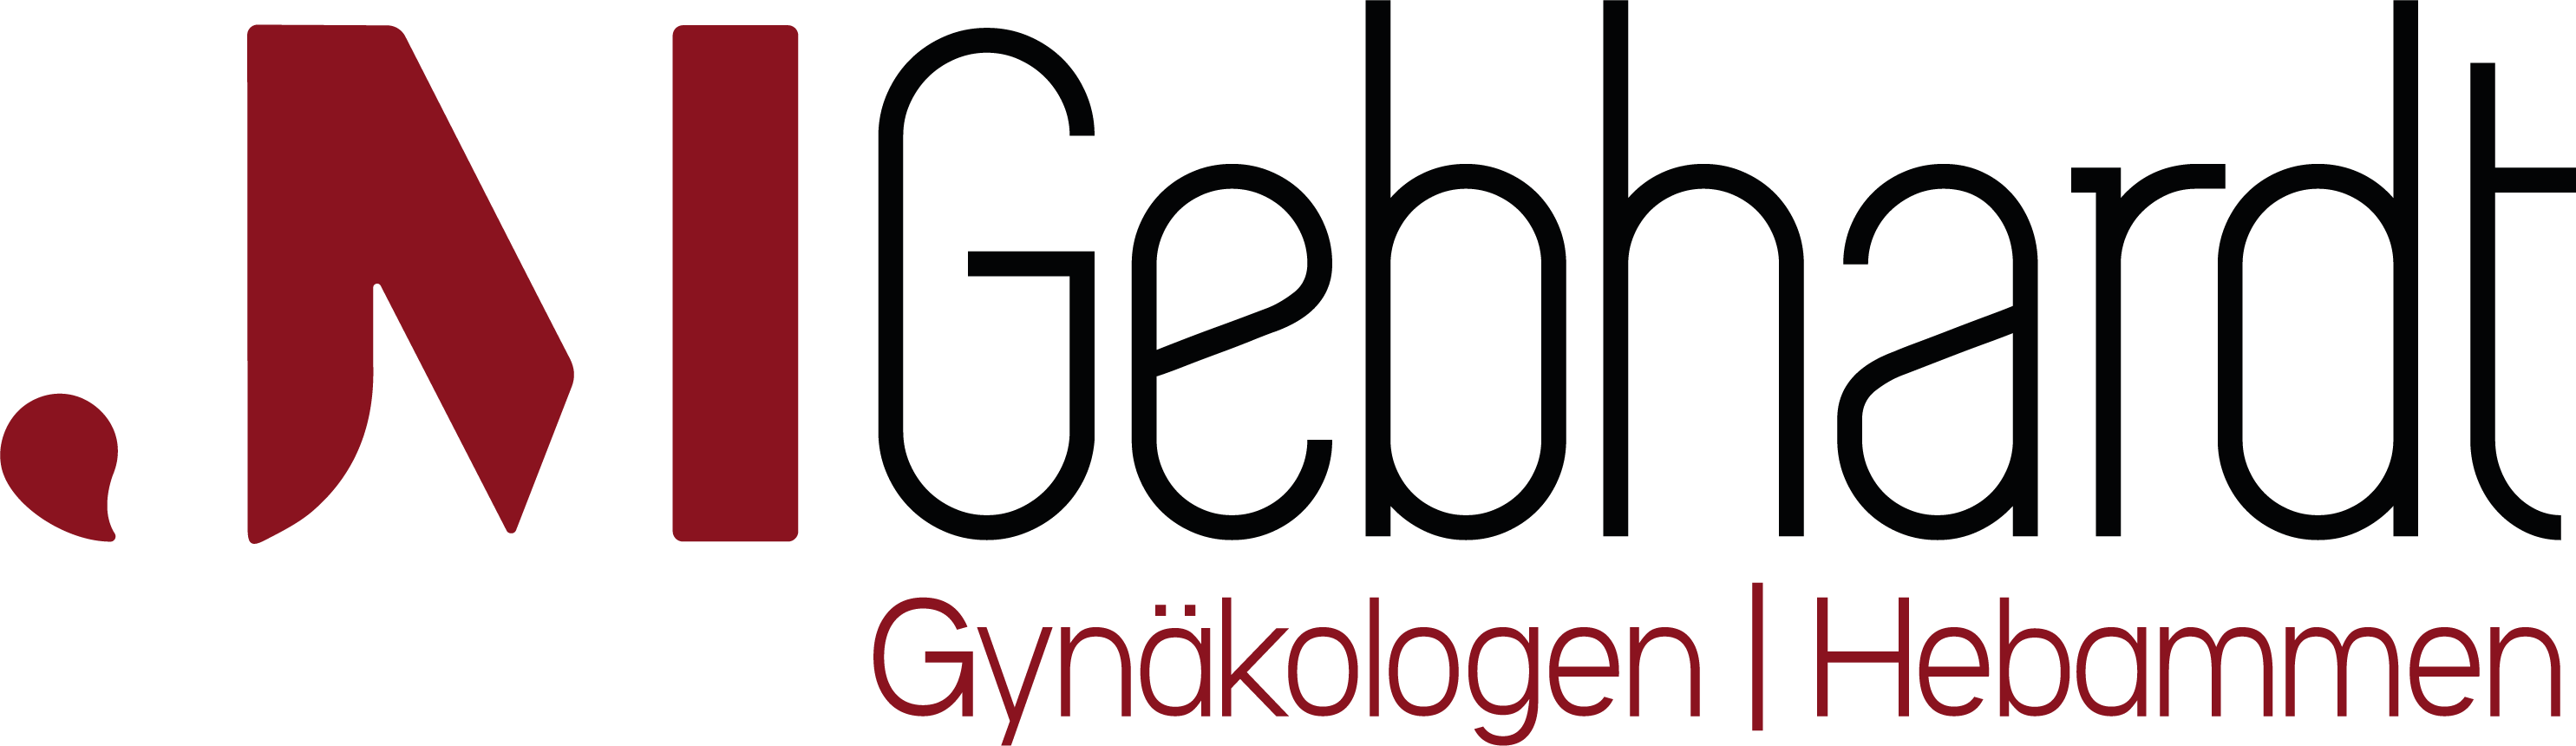 Gebhardt Gynäkologie